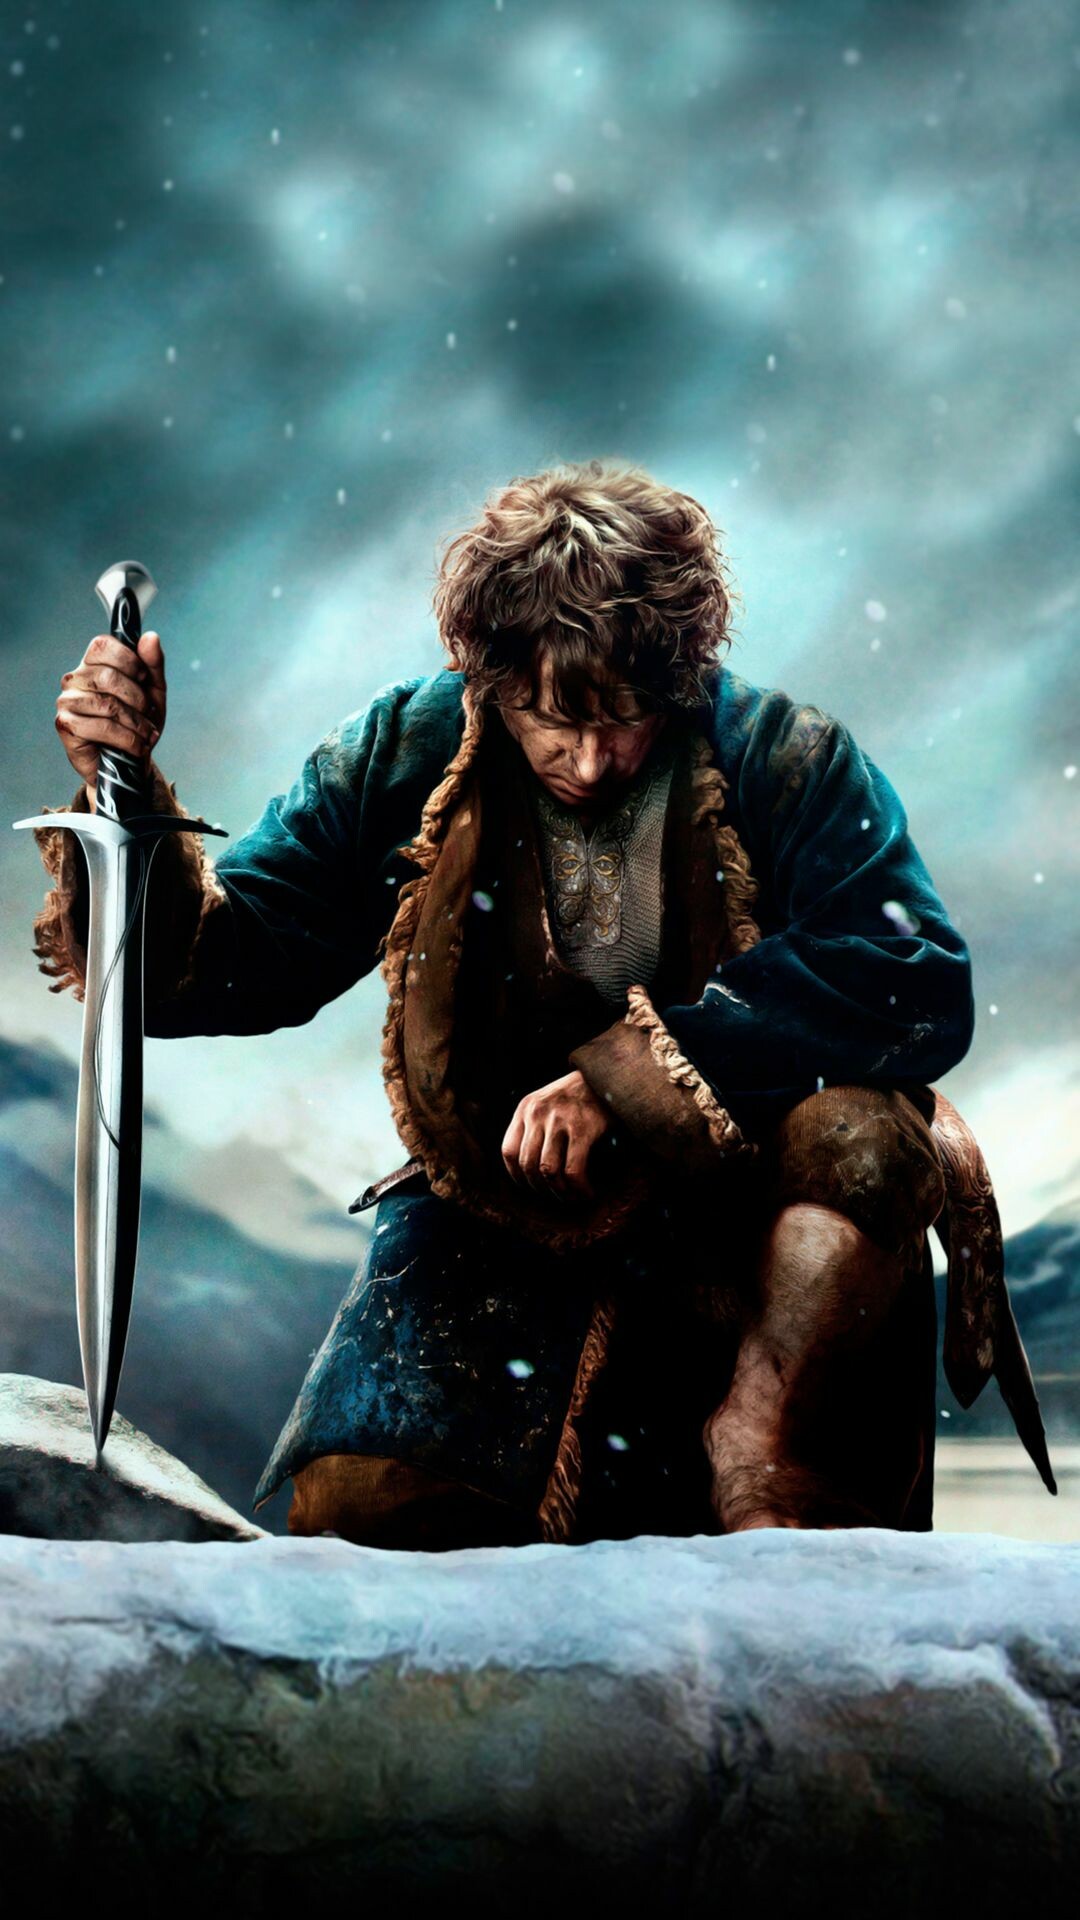 The Hobbit: The Battle of the Five Armies, A 2014 epic high fantasy adventure film, Bilbo. 1080x1920 Full HD Wallpaper.